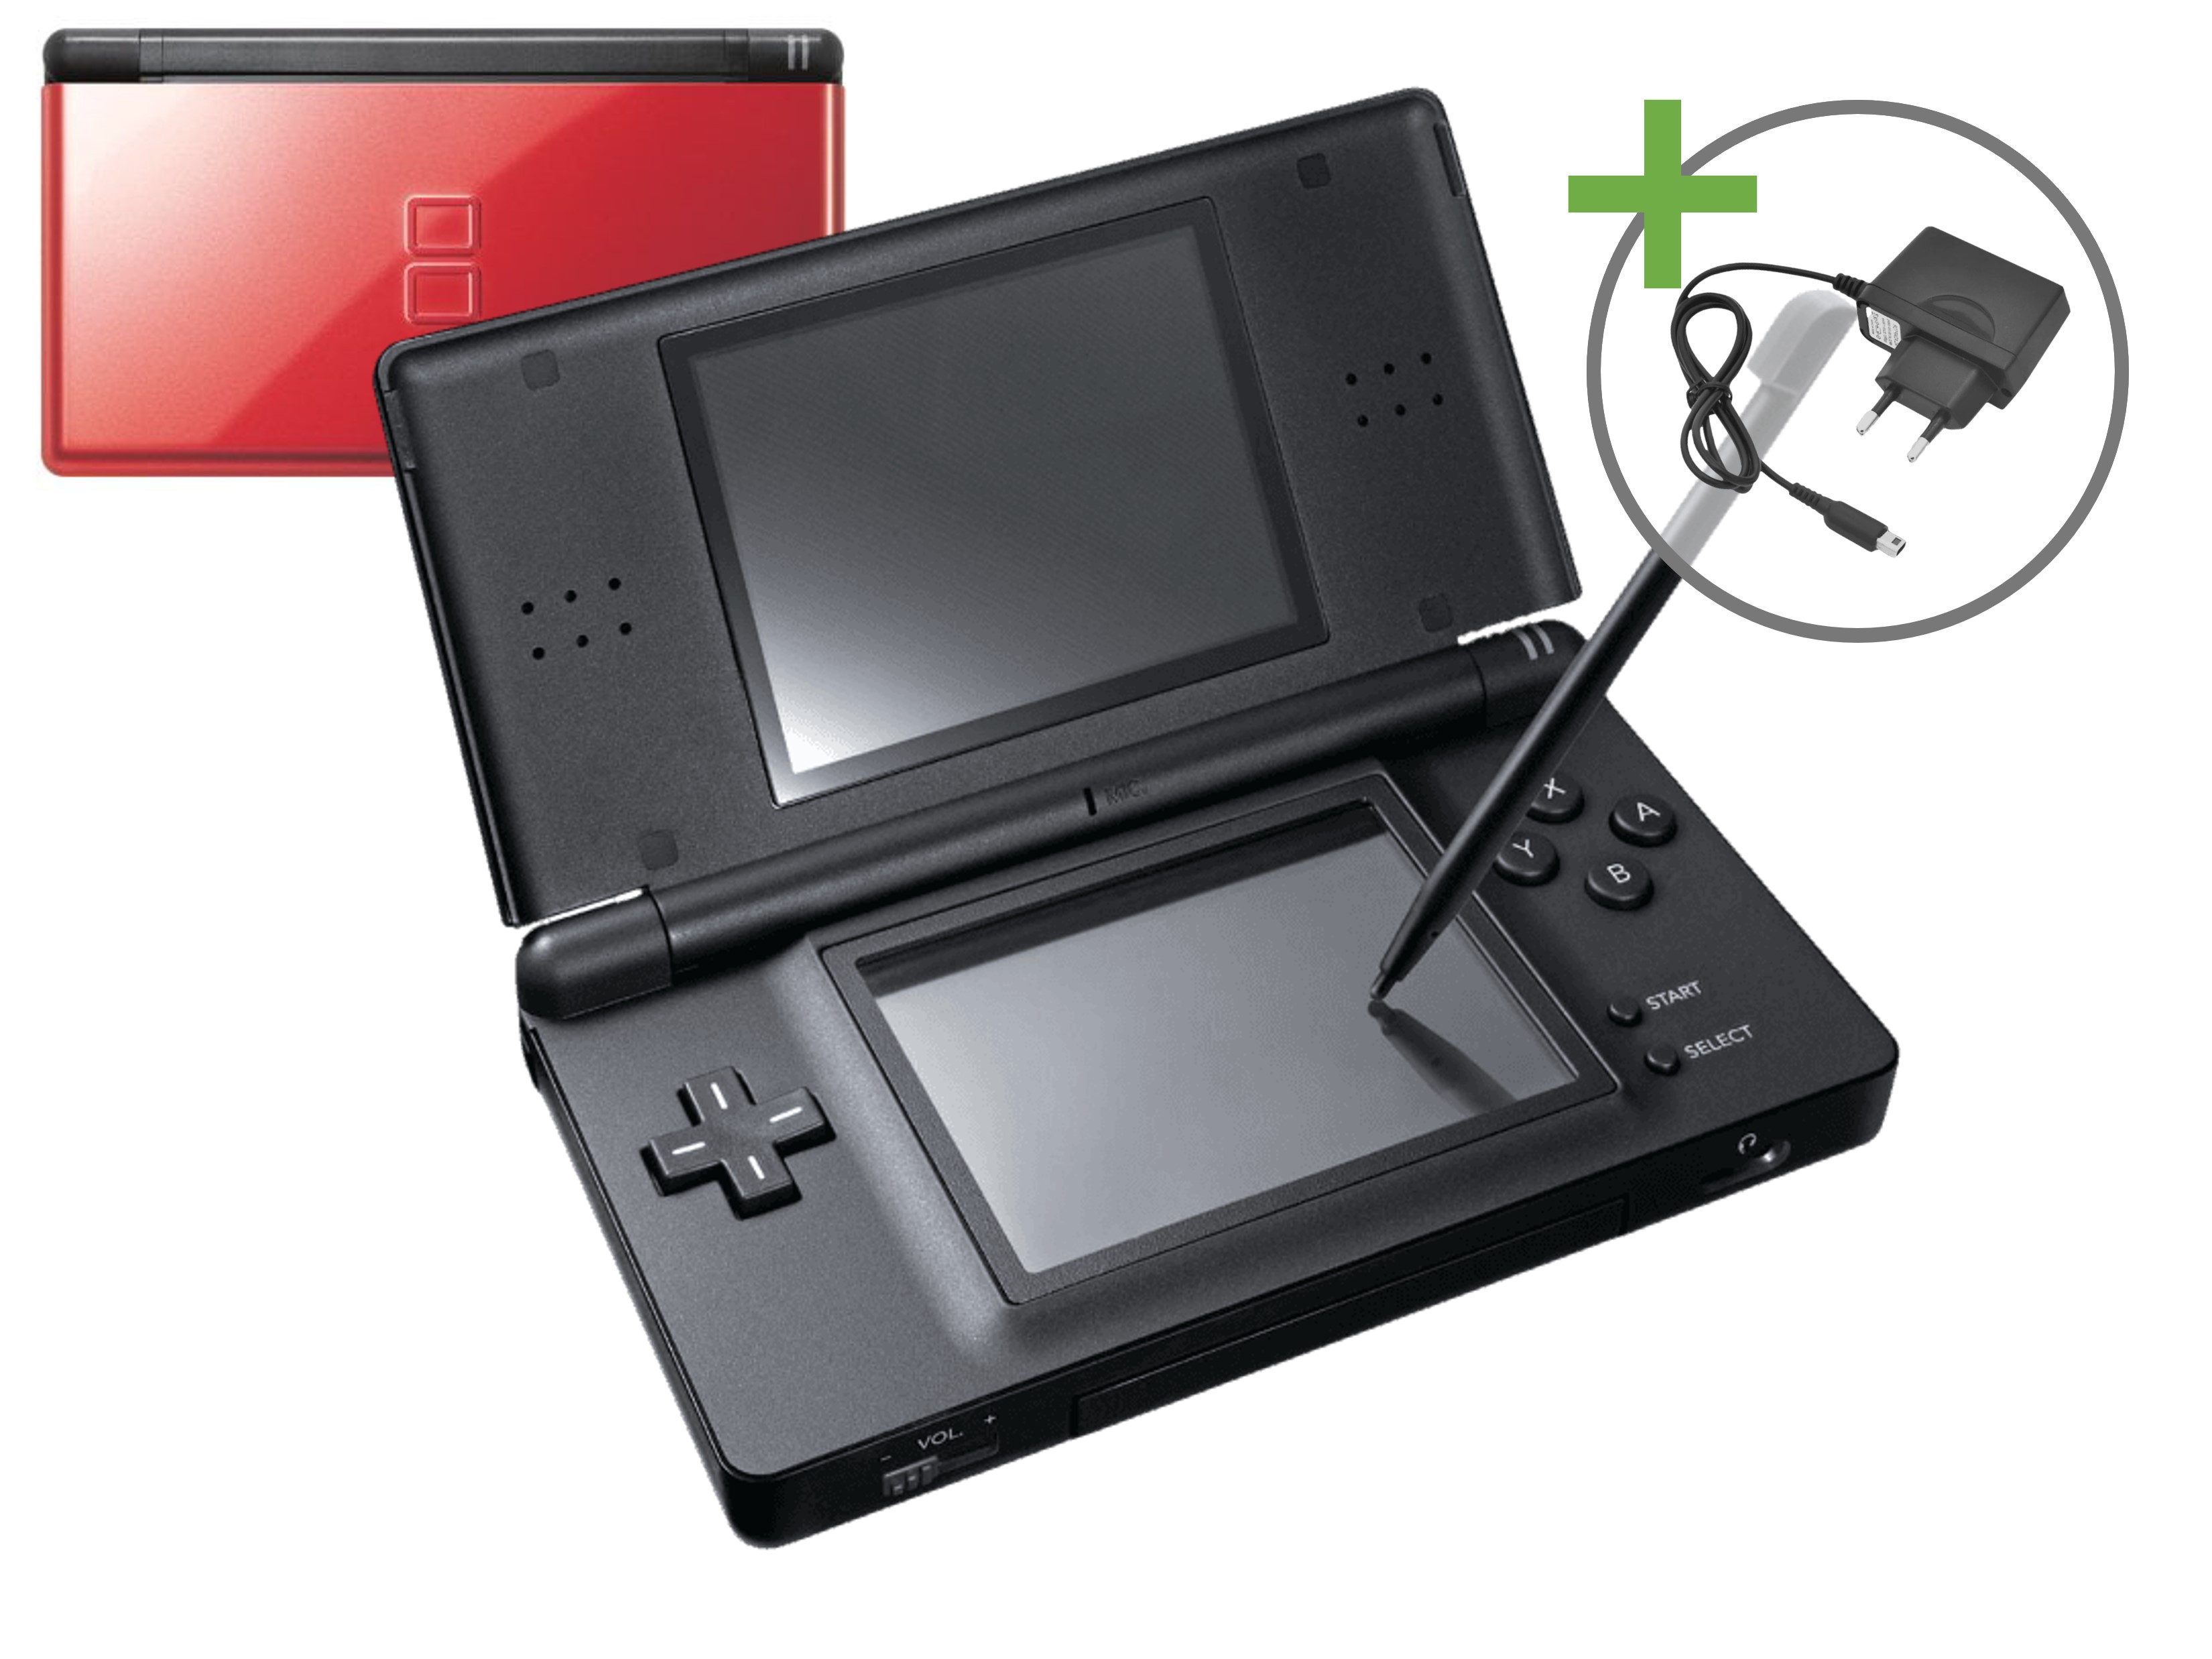 Nintendo DS Lite - Crimson Red/Black - Nintendo DS Hardware